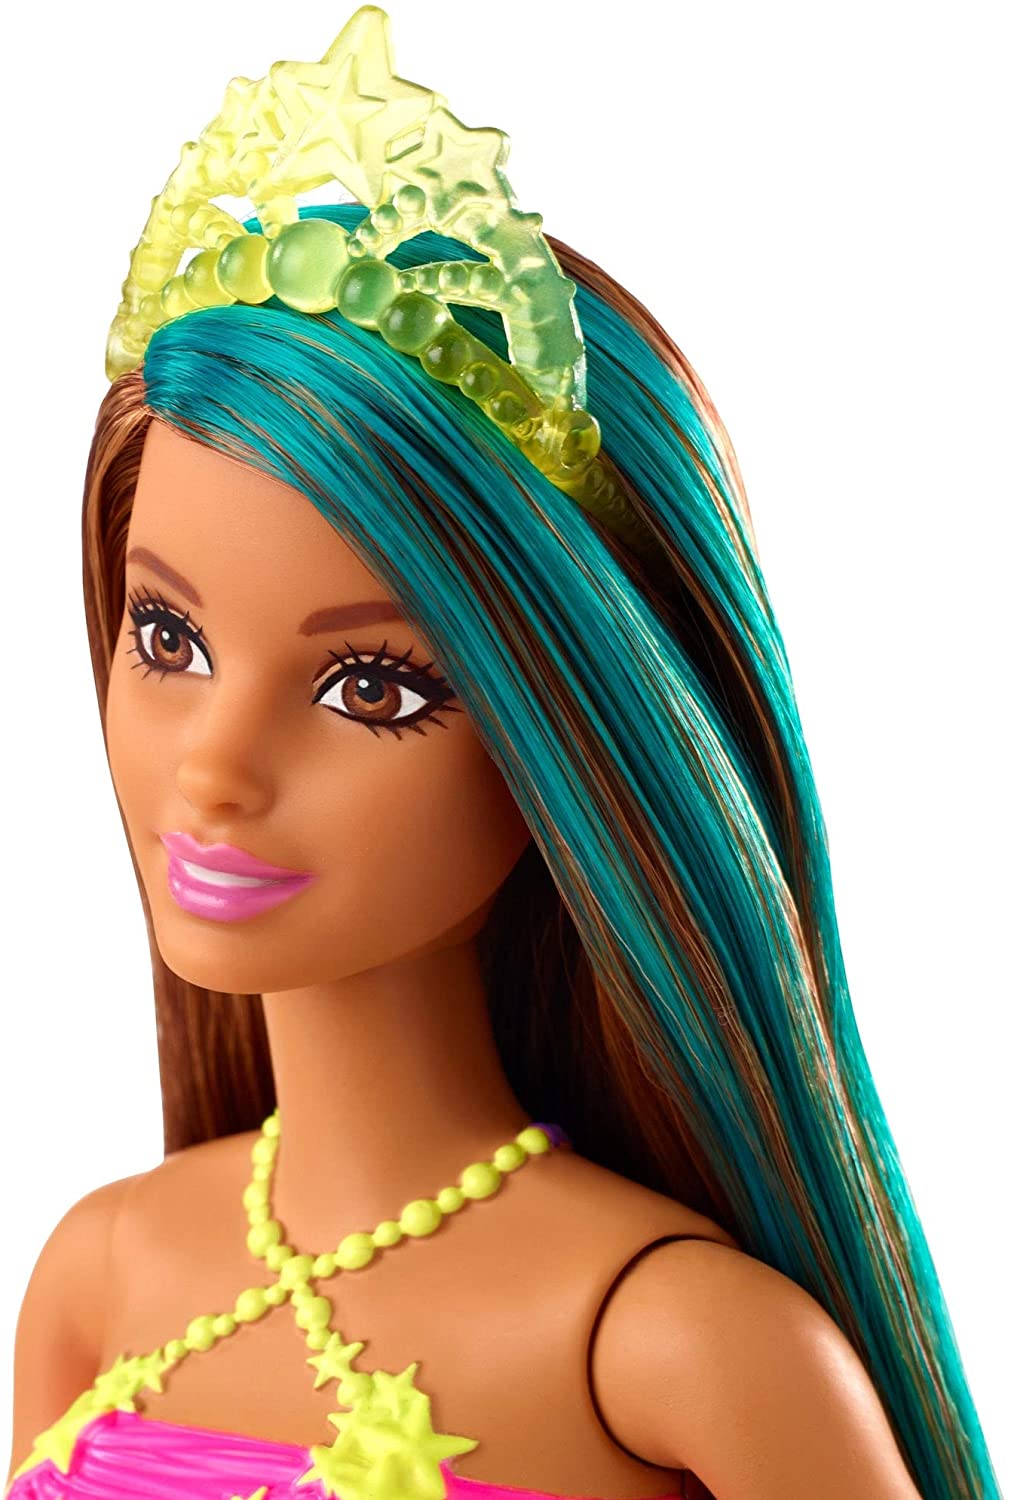 Barbie Princesa Dreamtopia